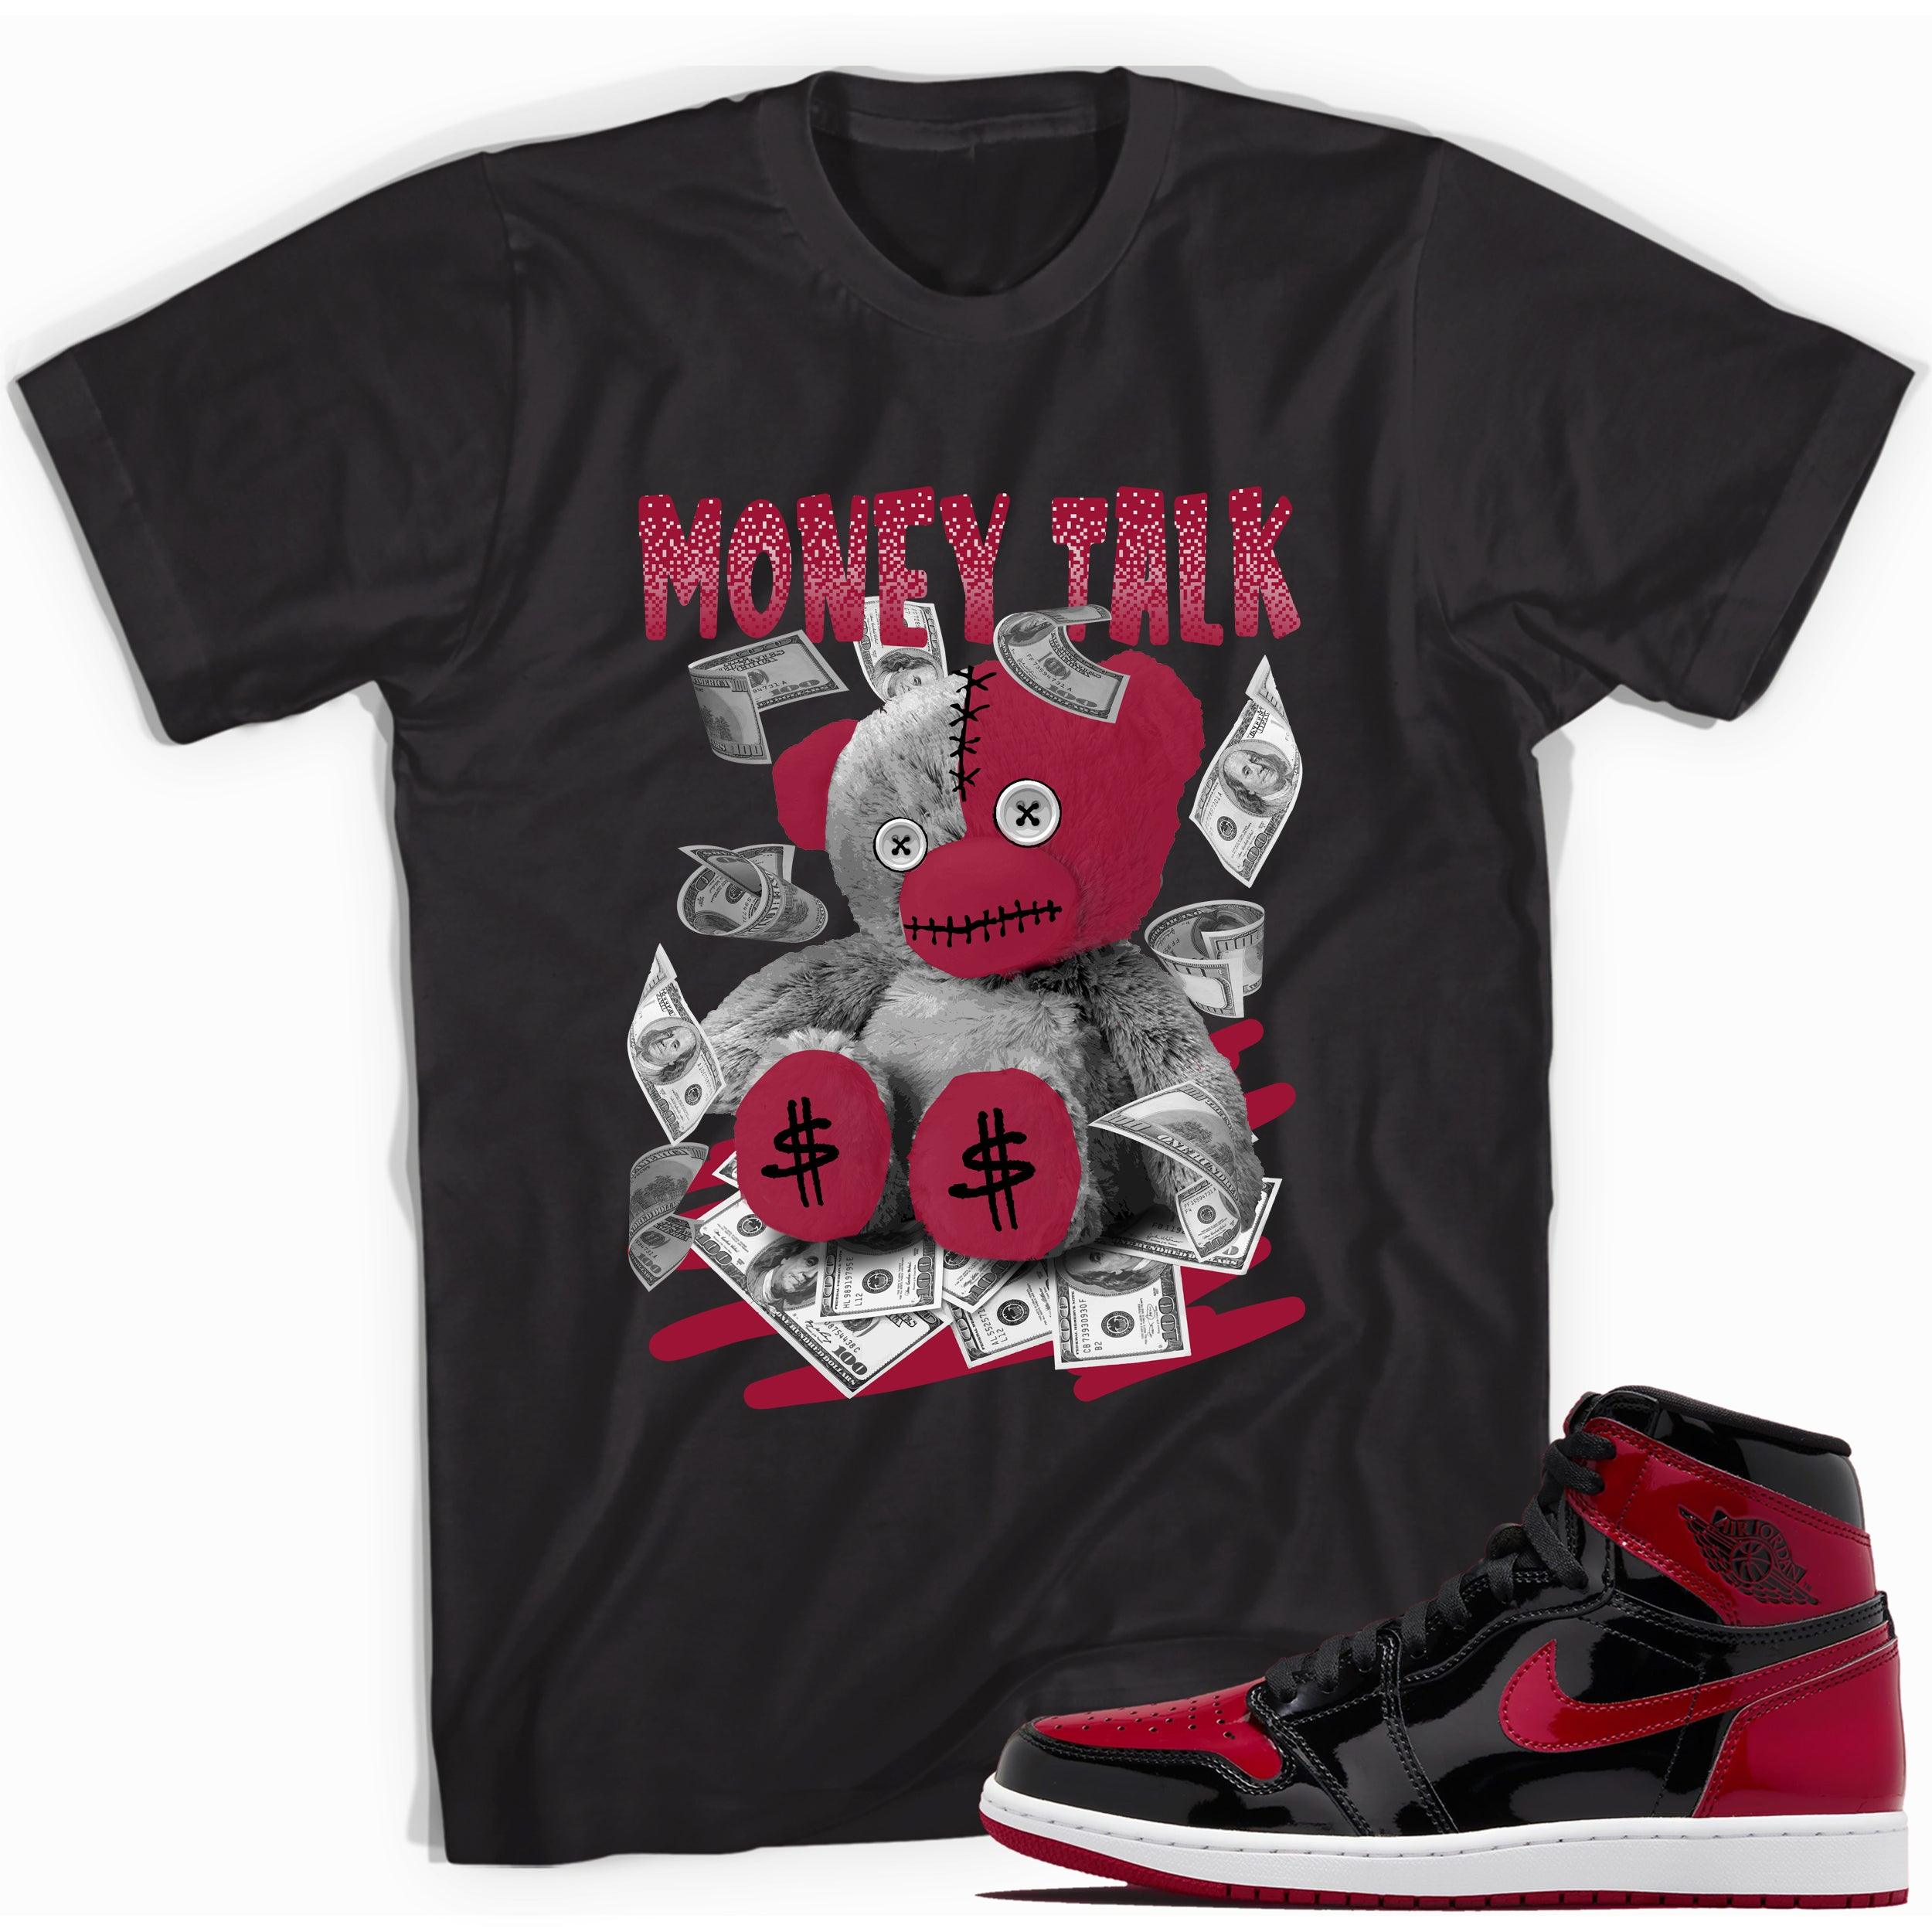 Black Money Talk Shirt for Jordan 1s Patent Bred photo